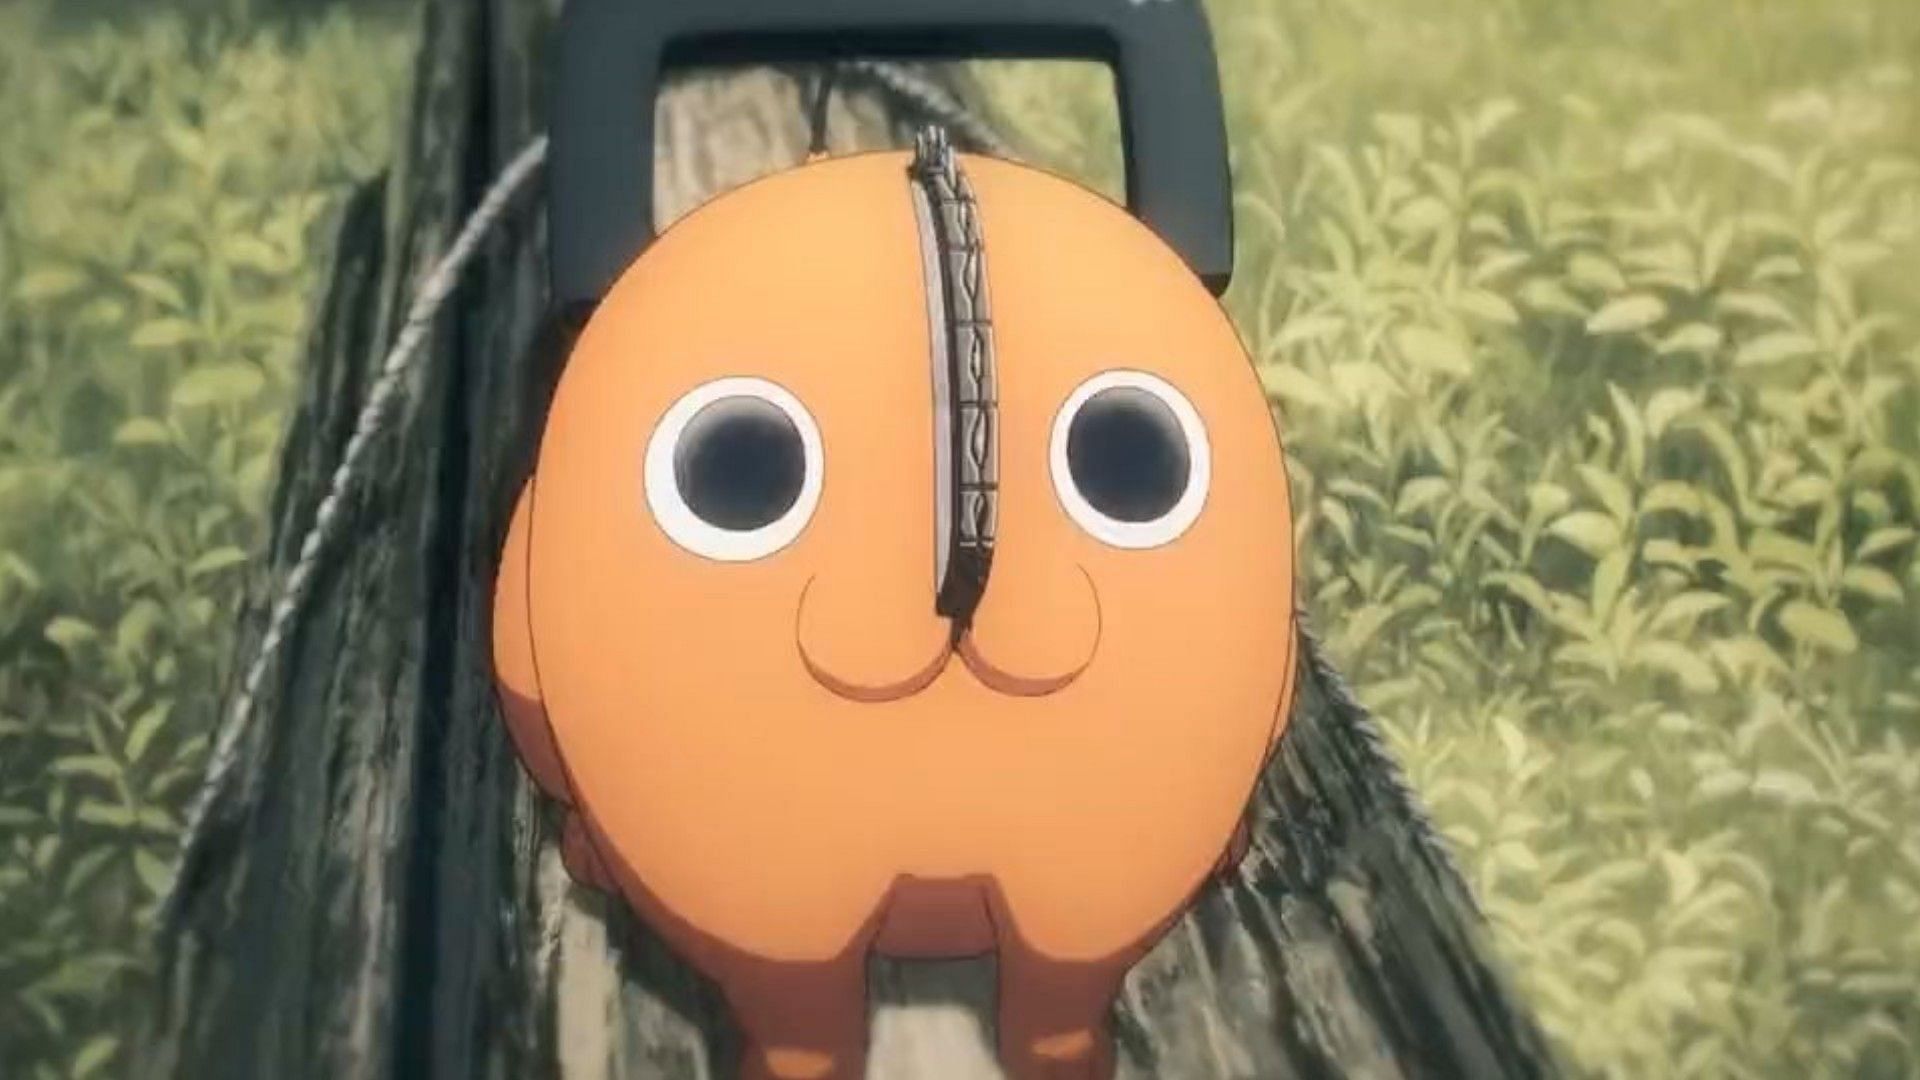 Chainsaw Man' anime season 1 ep. 10: How, where to watch, stream